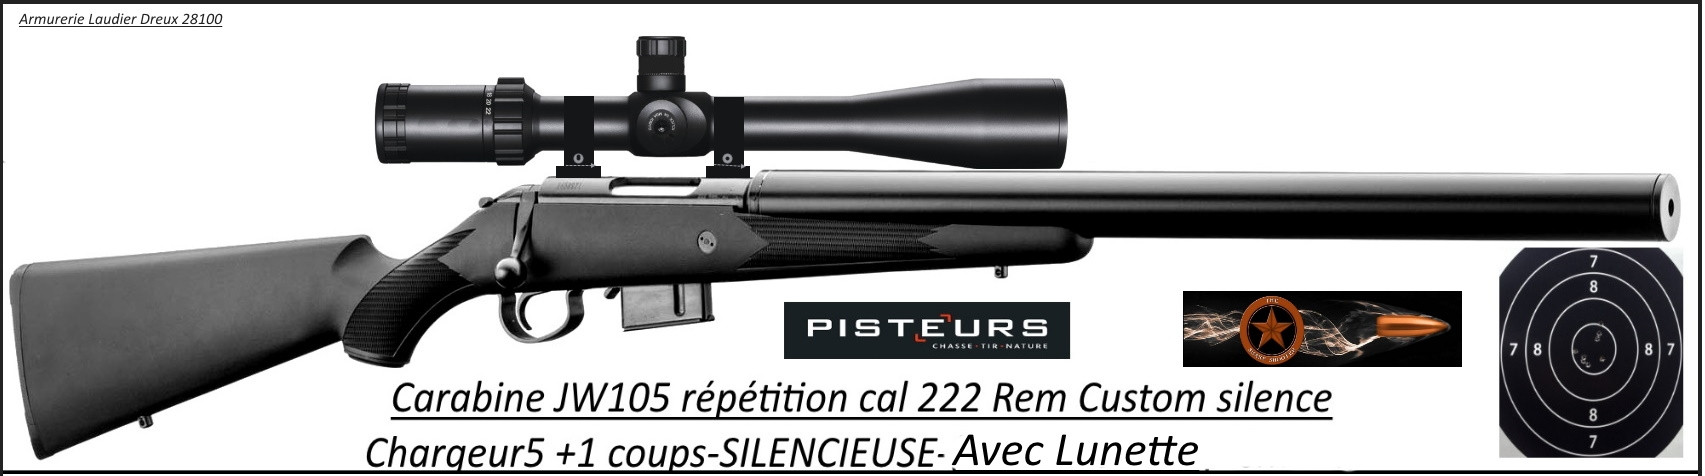 Carabine JW105 CUSTOM SILENCE Calibre 222 Rem-Chargeur 5+1 coups+lunette-Promotion-Ref CR706S-bis-ea